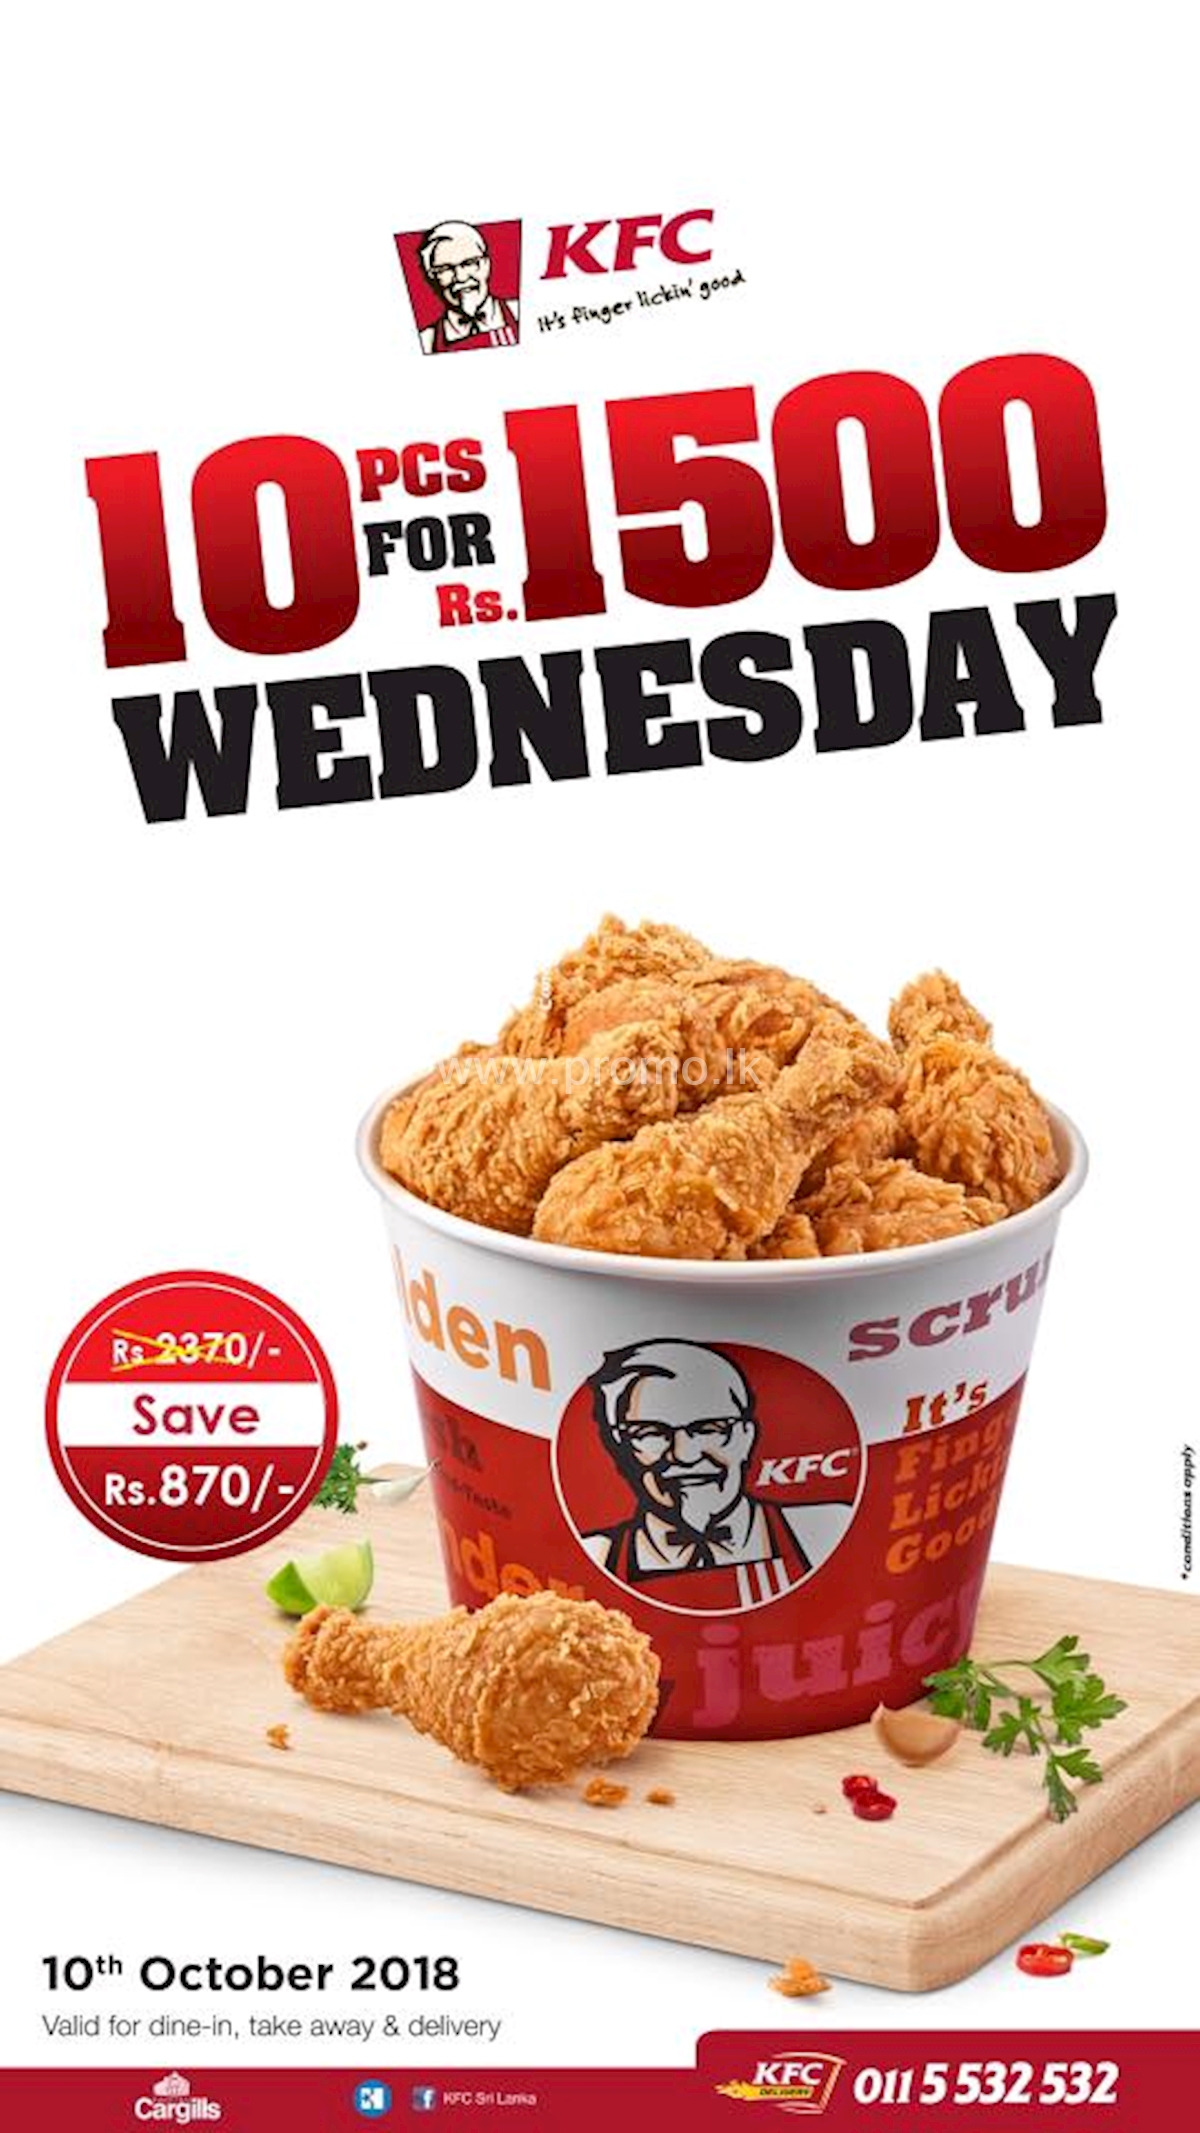 Hot and Crispy Wednesday from KFC